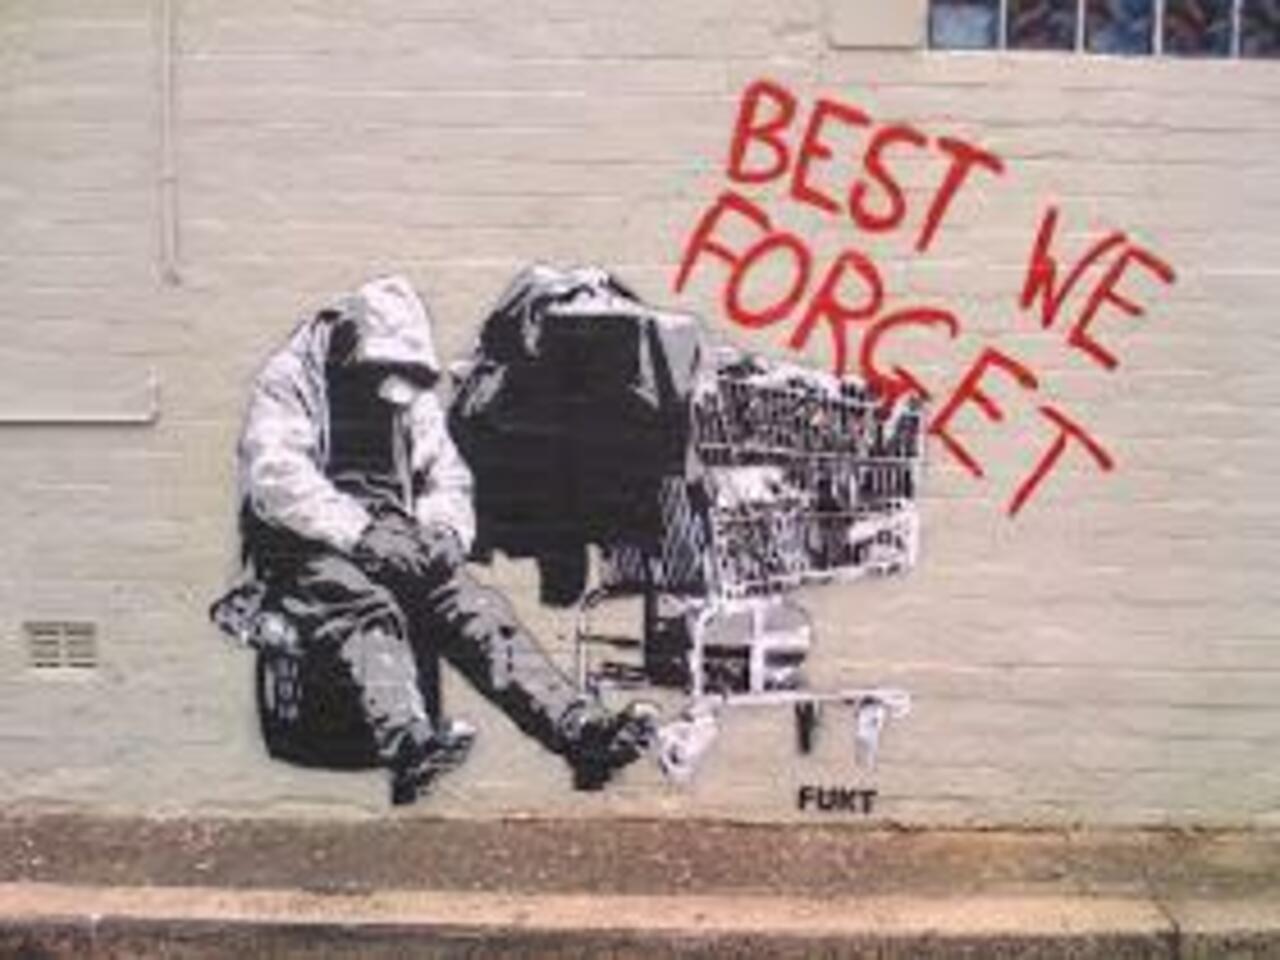 "@CmoaXWoman: Streets of Sydney. #streetart http://t.co/wfhAfrFE1k" #graffiti #urbanart #streetart #spraypaint #stencil #art #mural